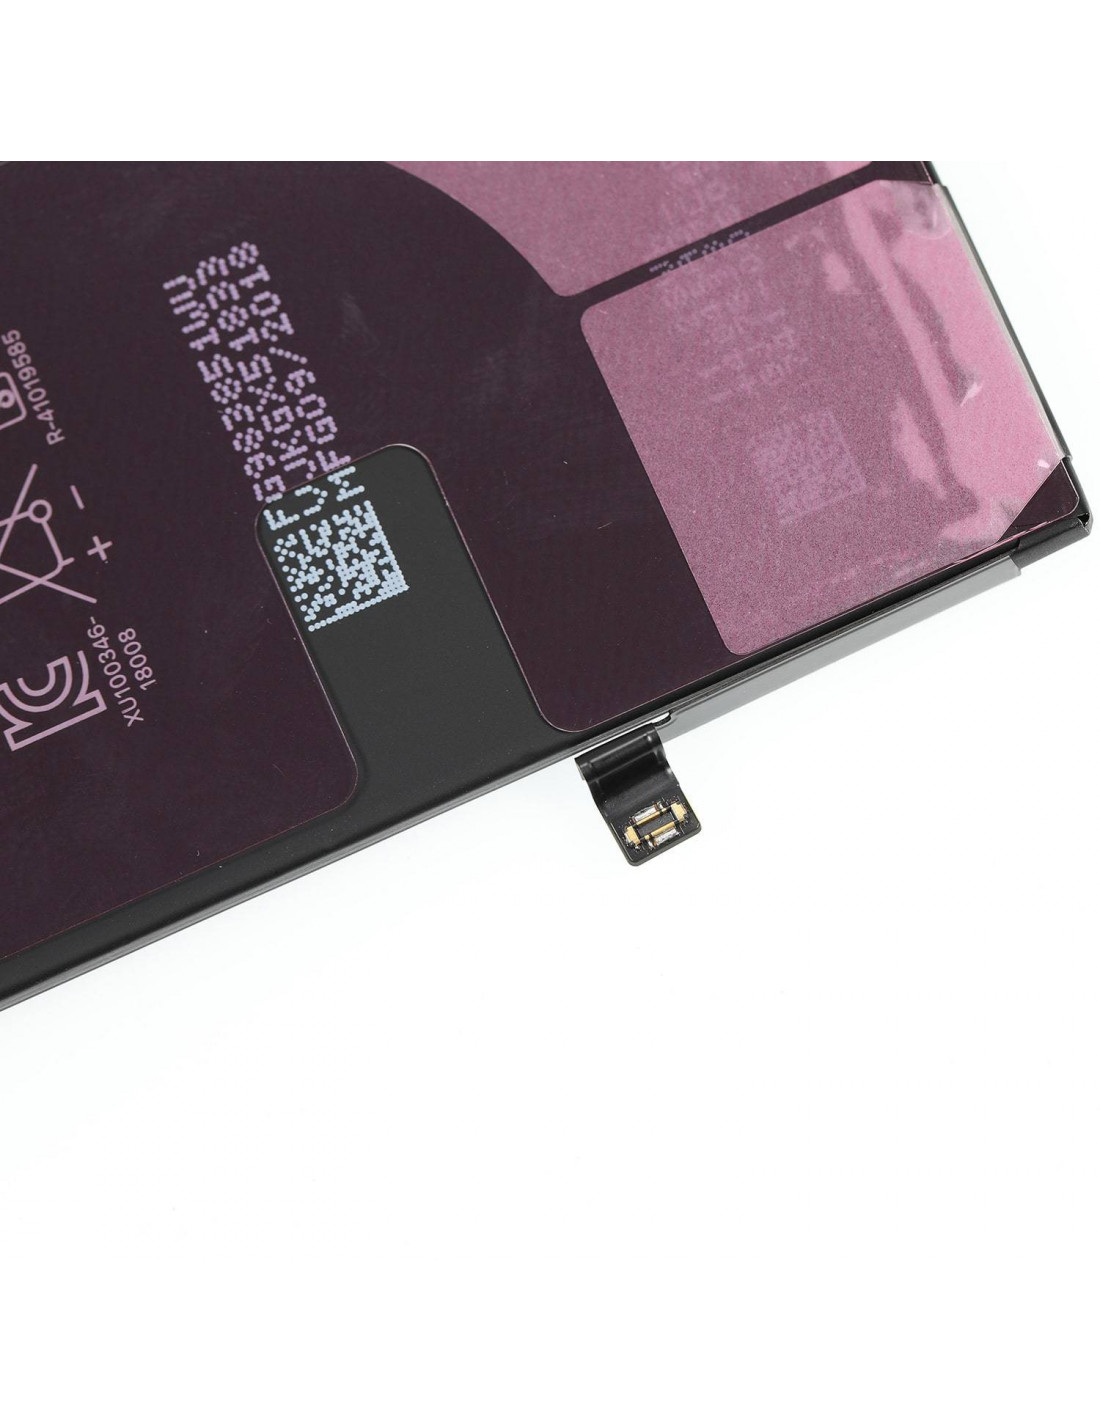 Batería iPhone XR – Provecel